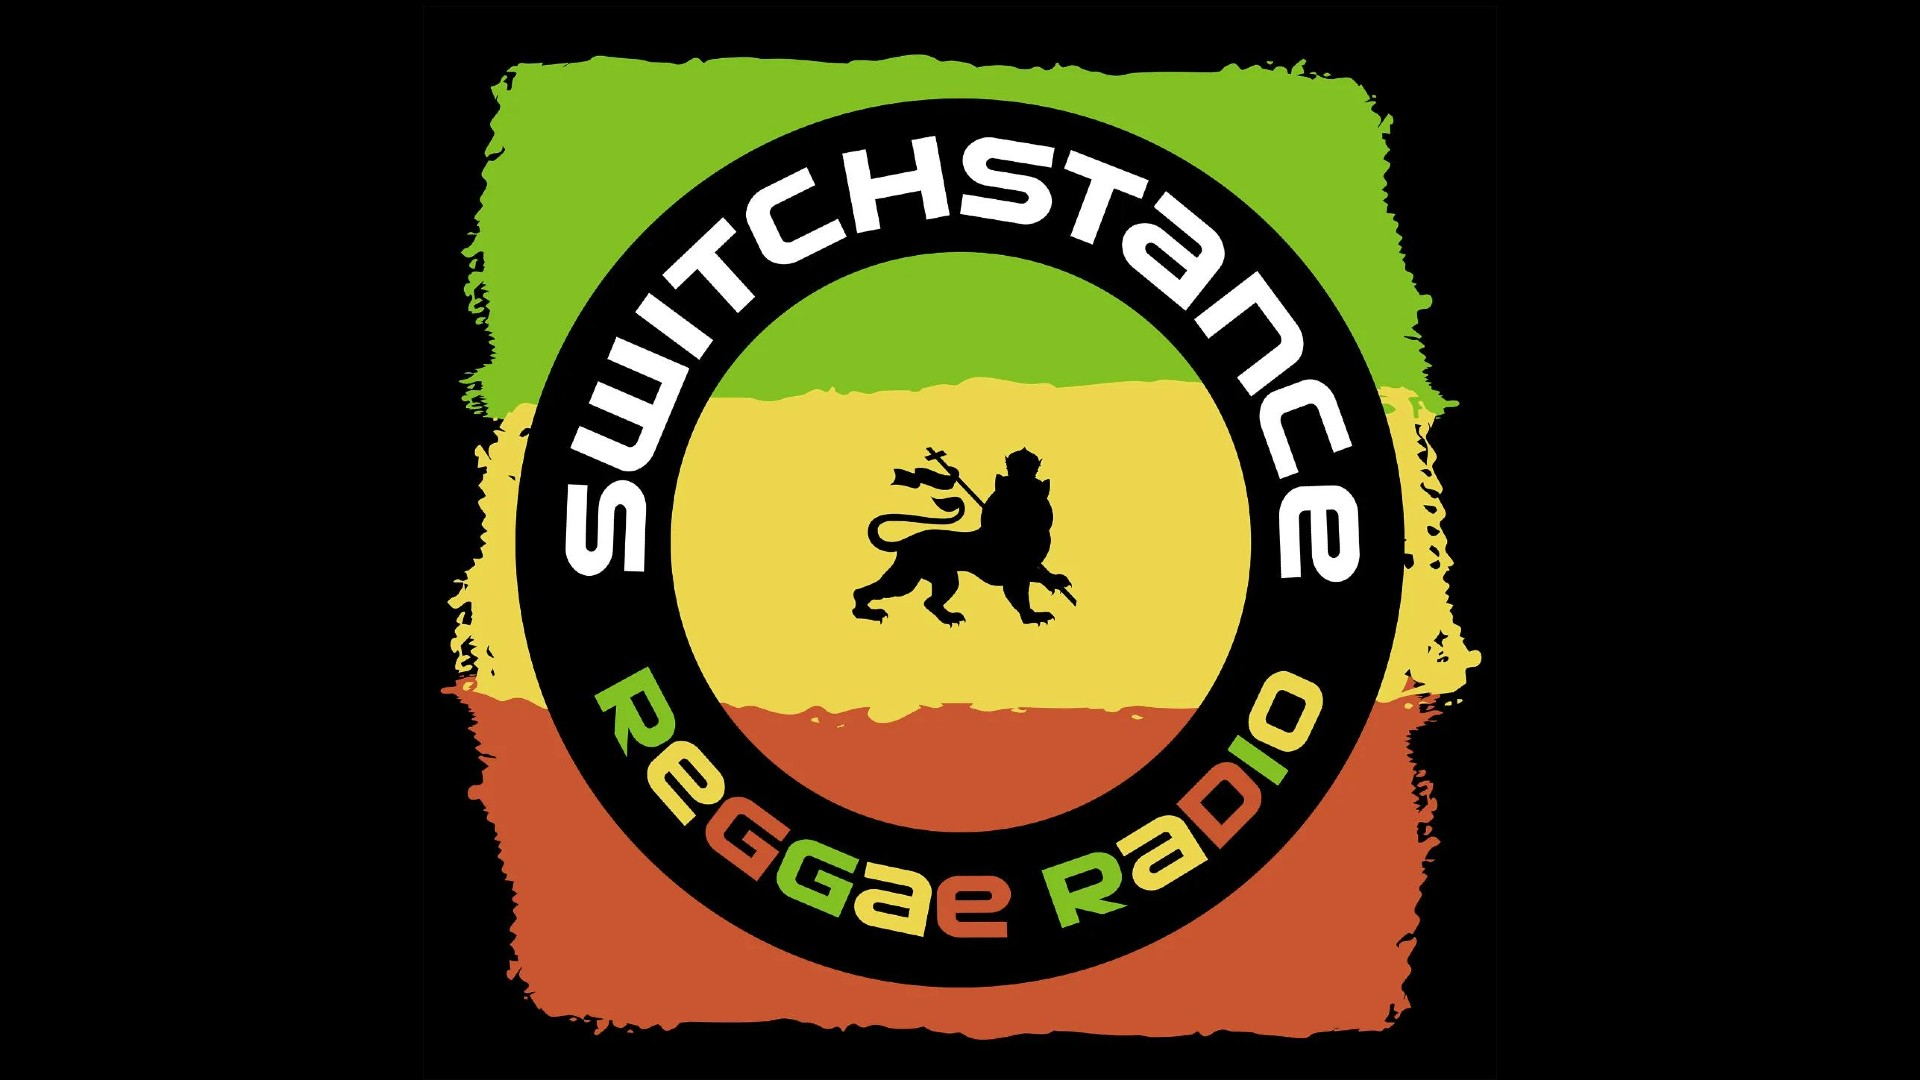 Switchstance Reggae Radio